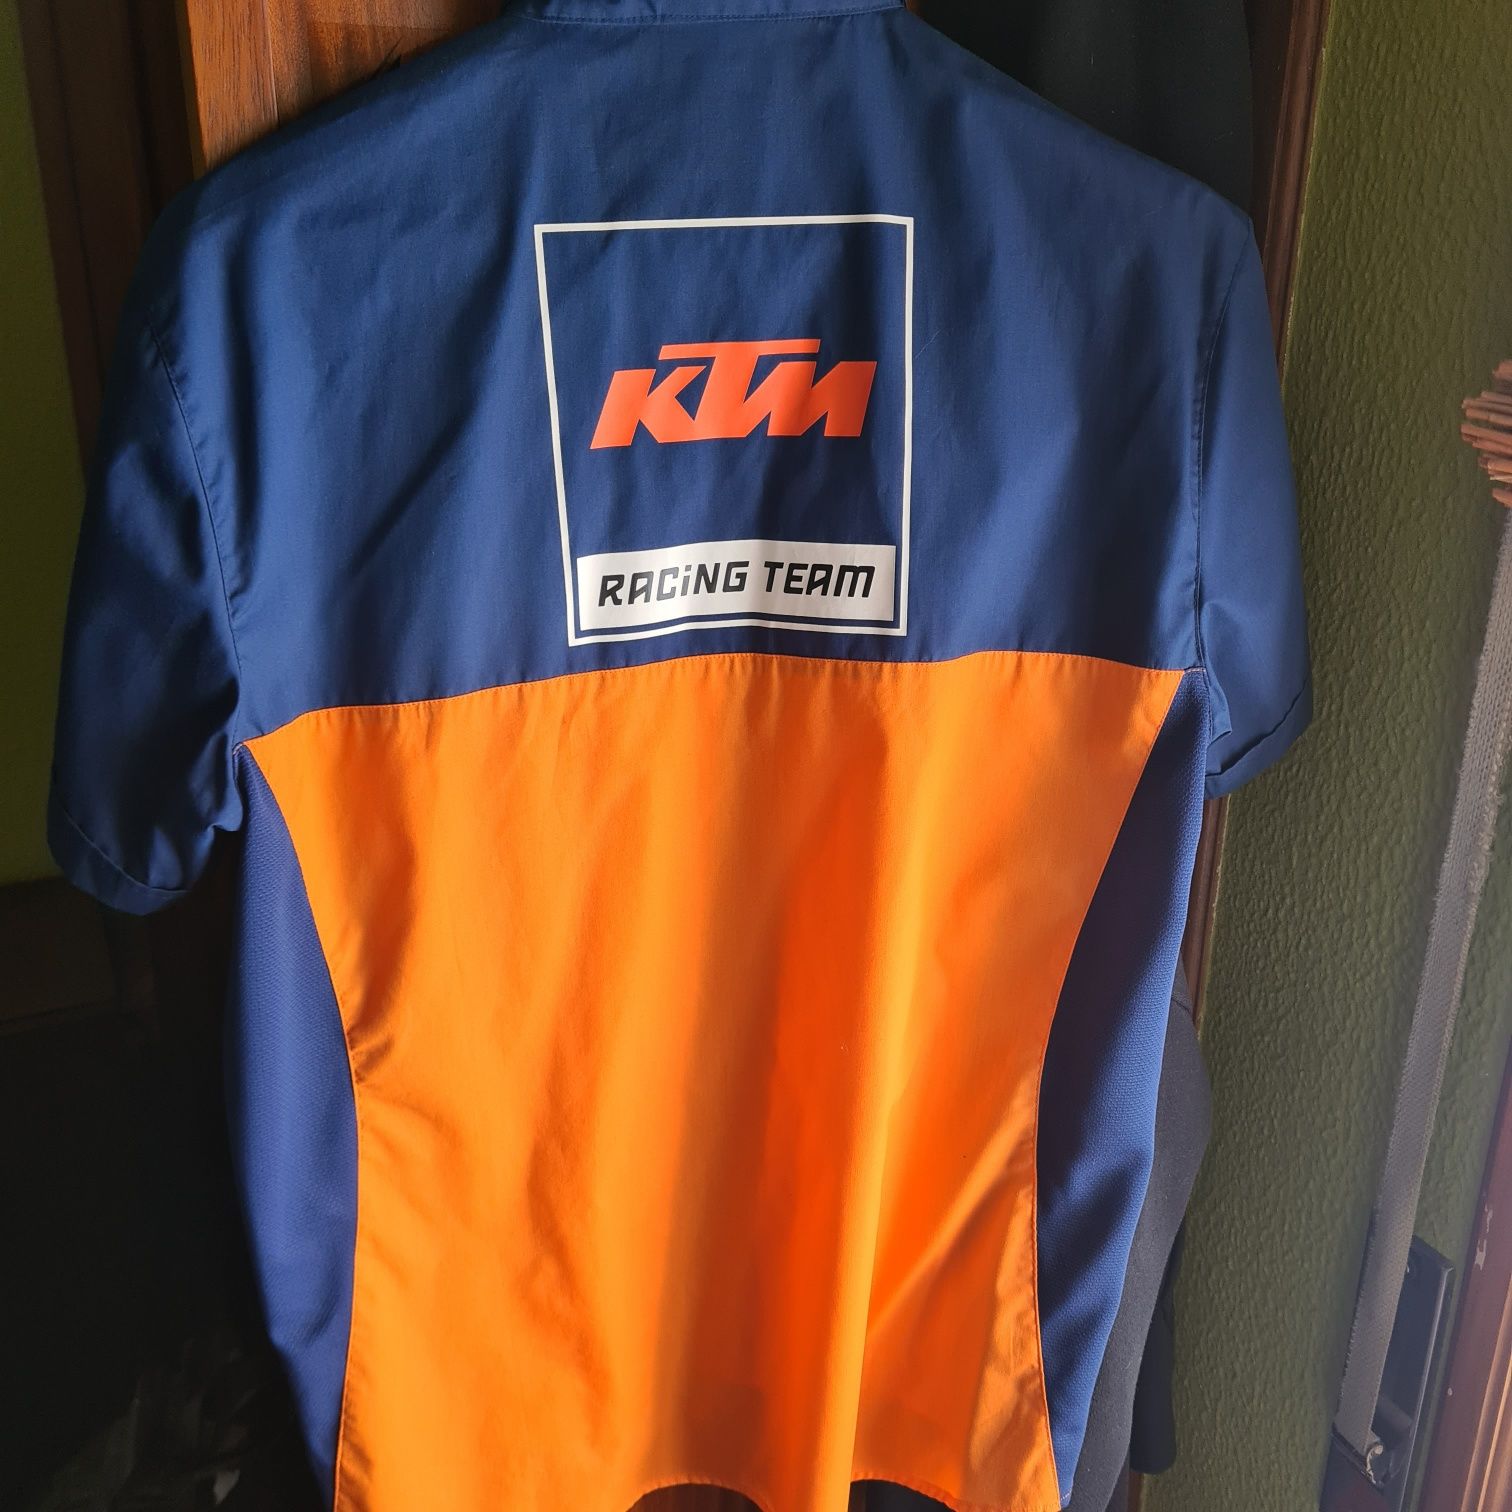 Camisa KTM Racing Team nova